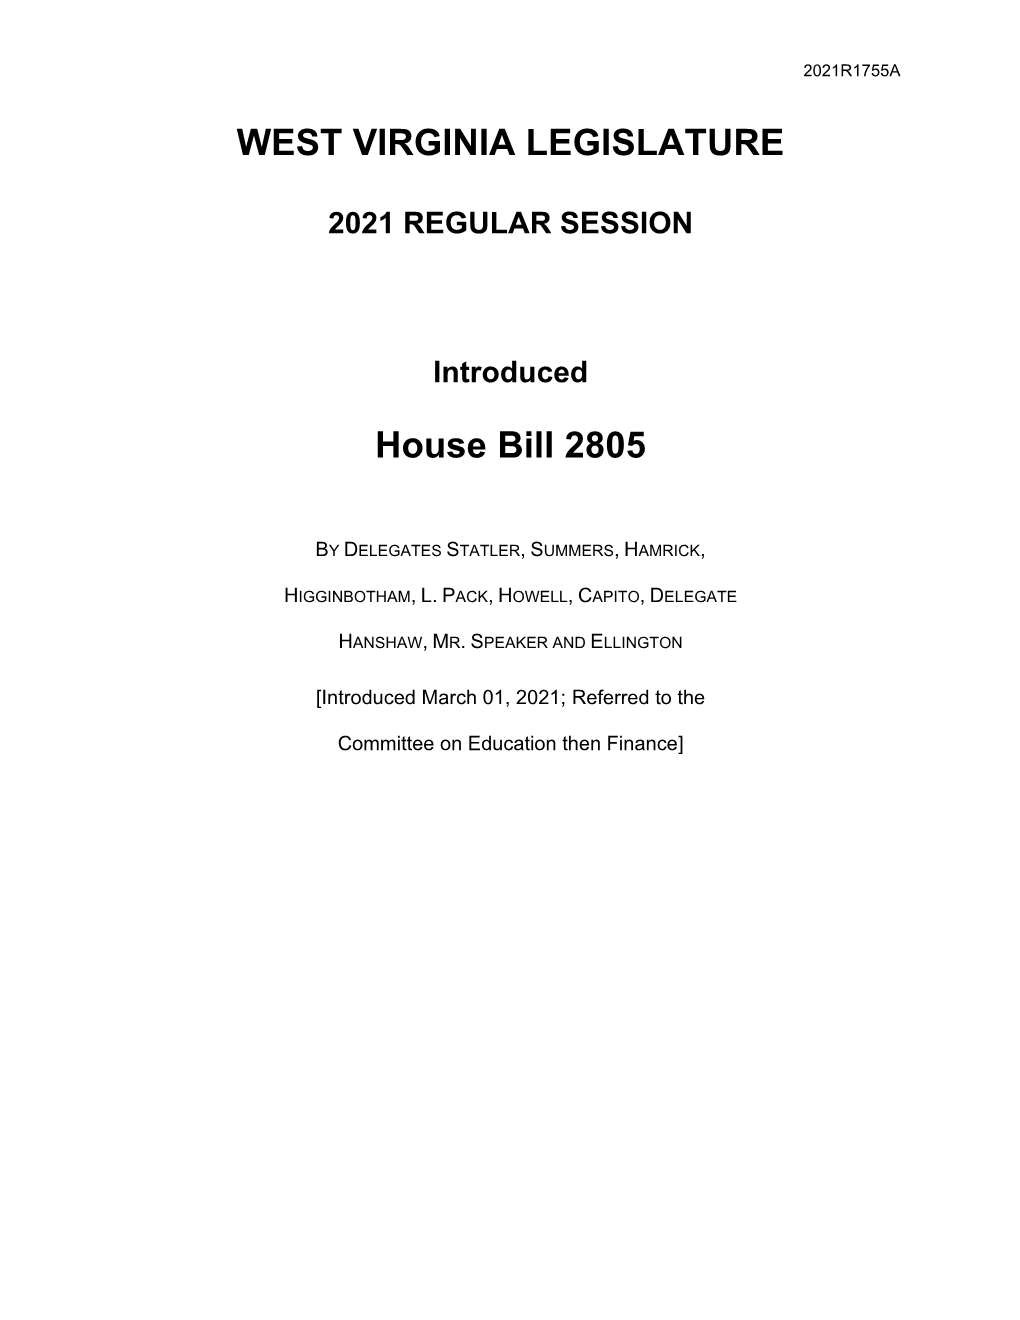 WEST VIRGINIA LEGISLATURE House Bill 2805